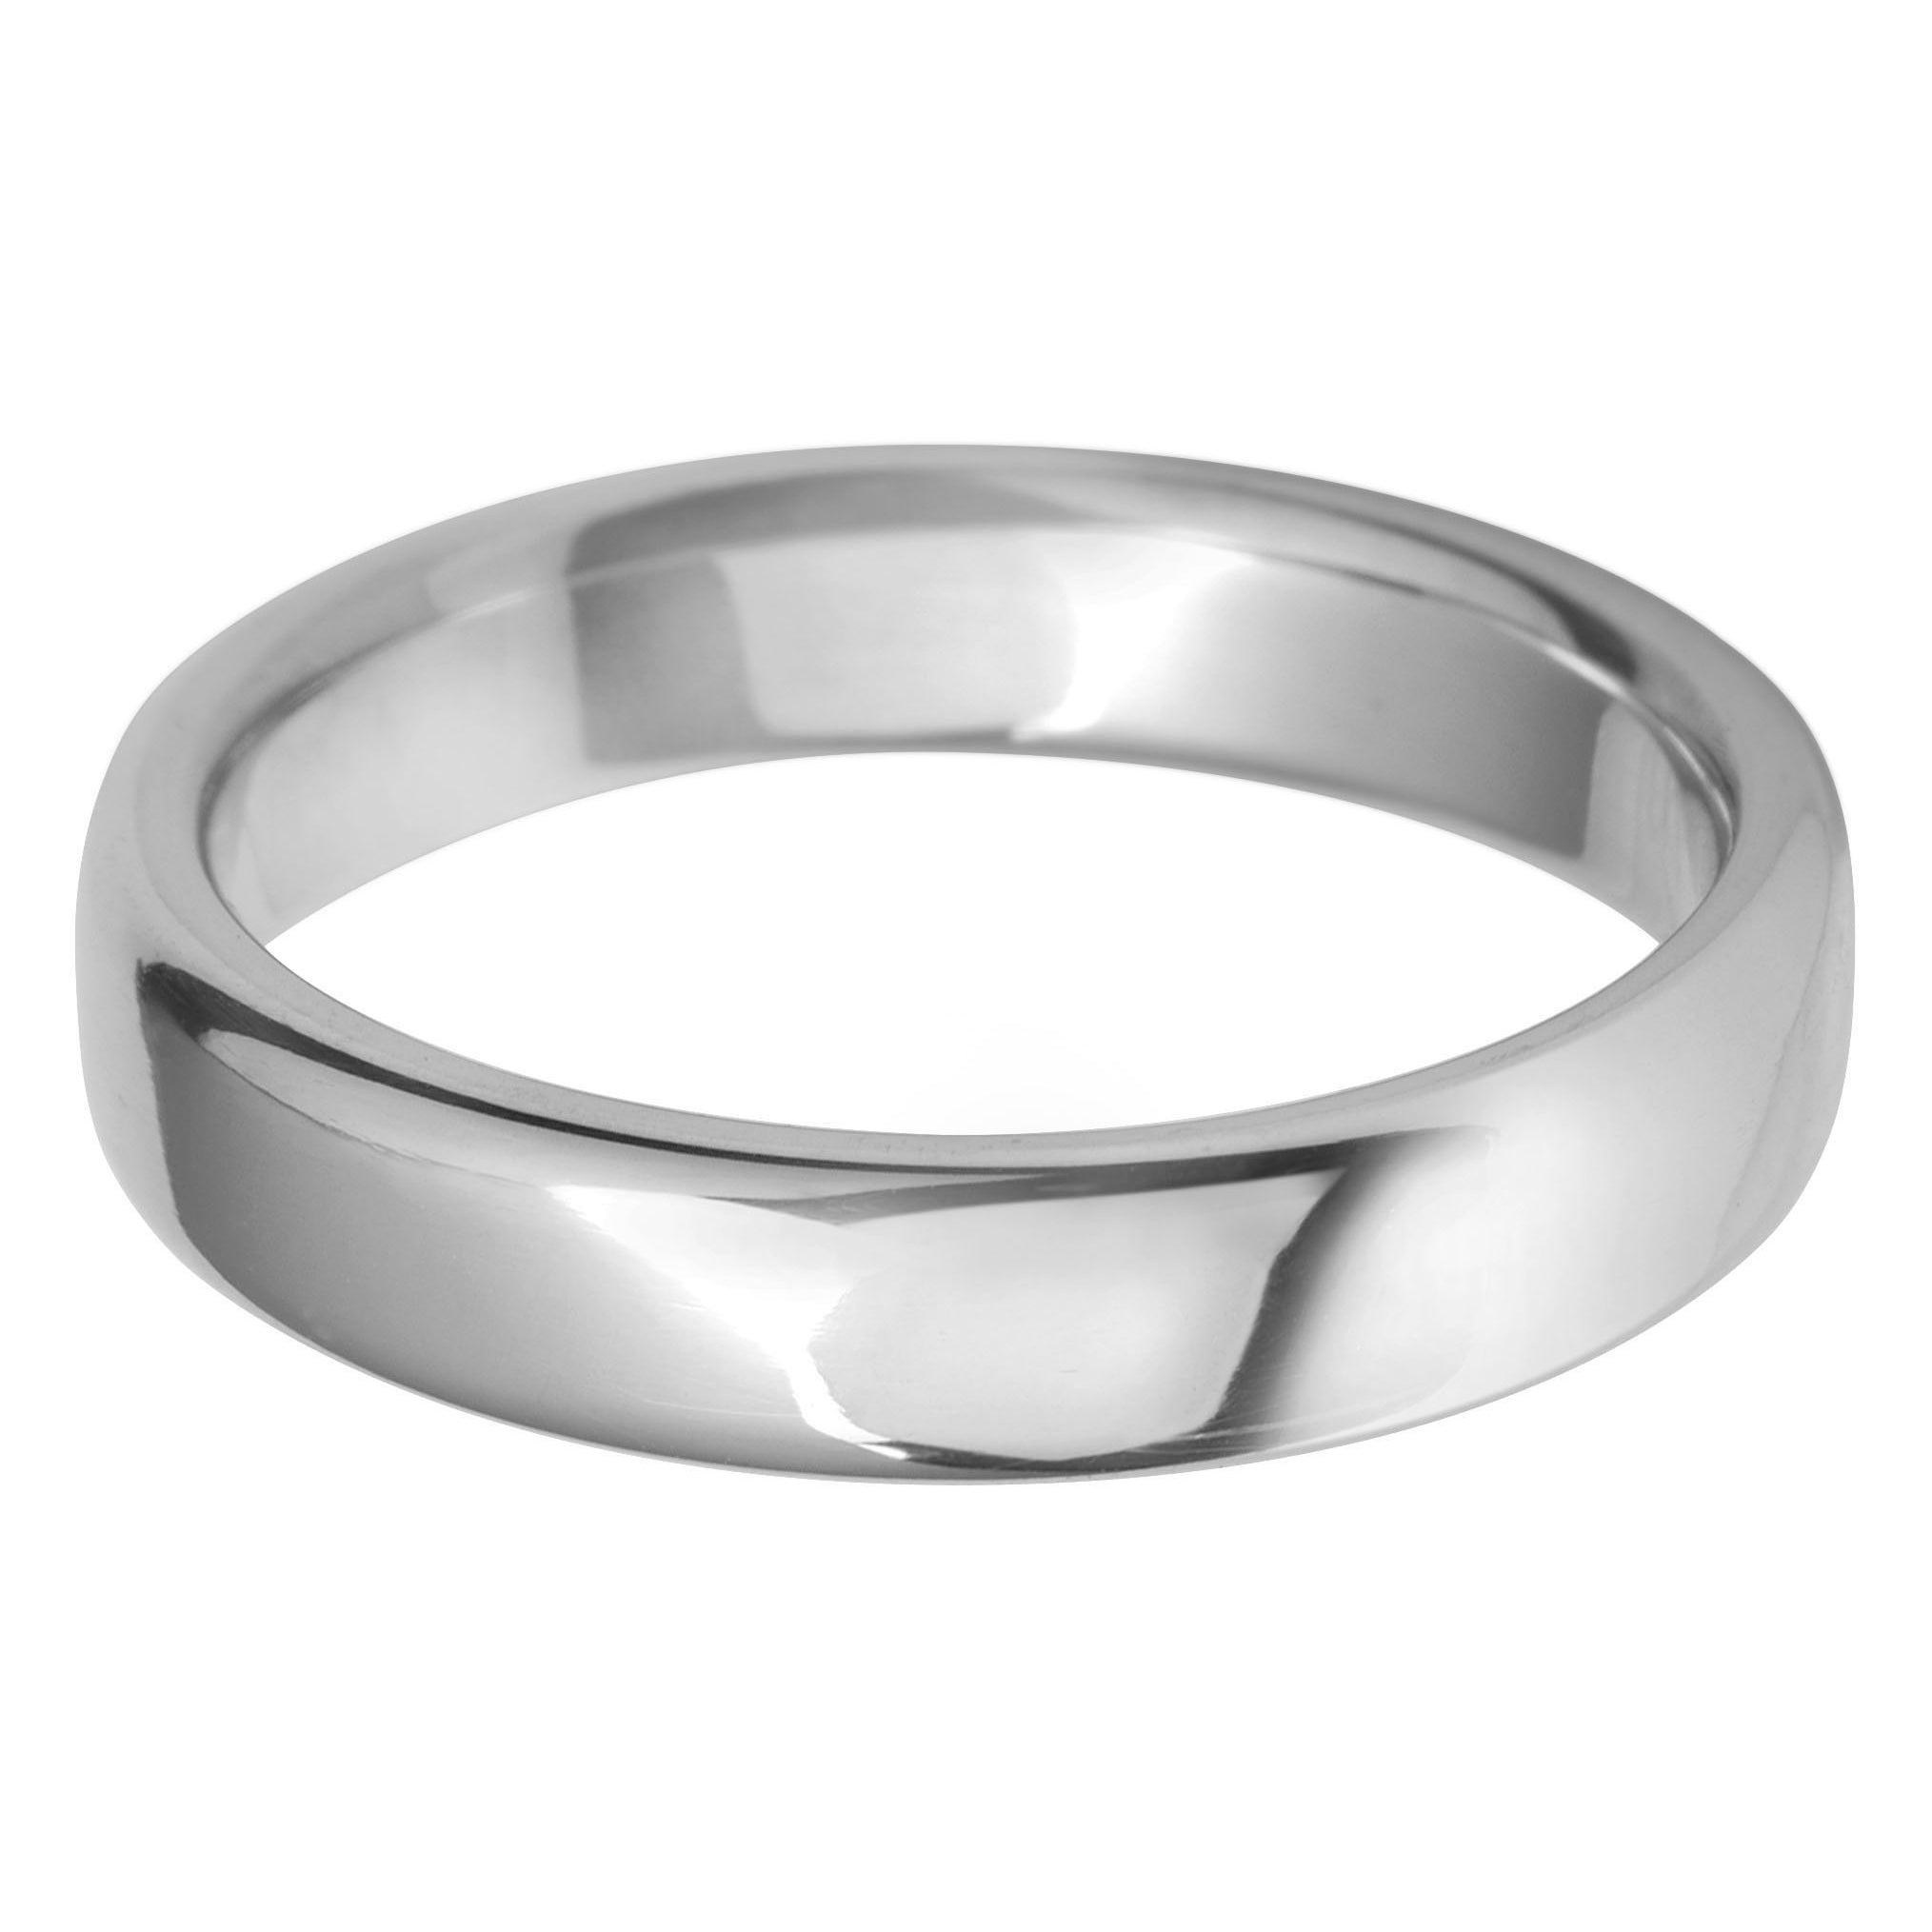 4mm Rounded Flat Medium Weight Wedding Ring